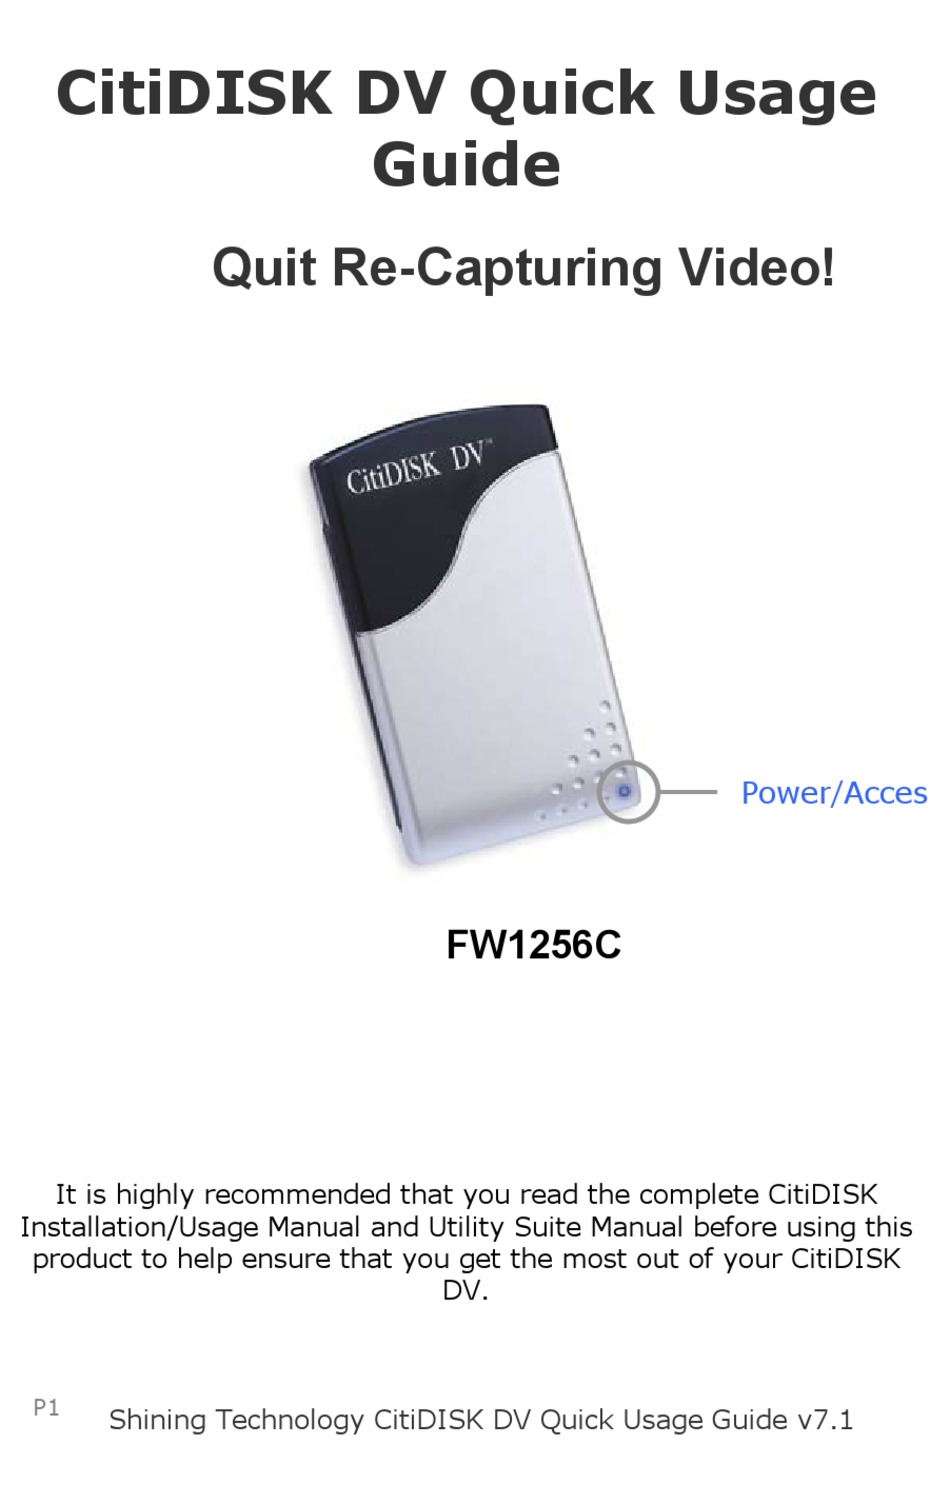 SHINING TECHNOLOGY CITIDISK DV FW1256C QUICK USE MANUAL Pdf Download